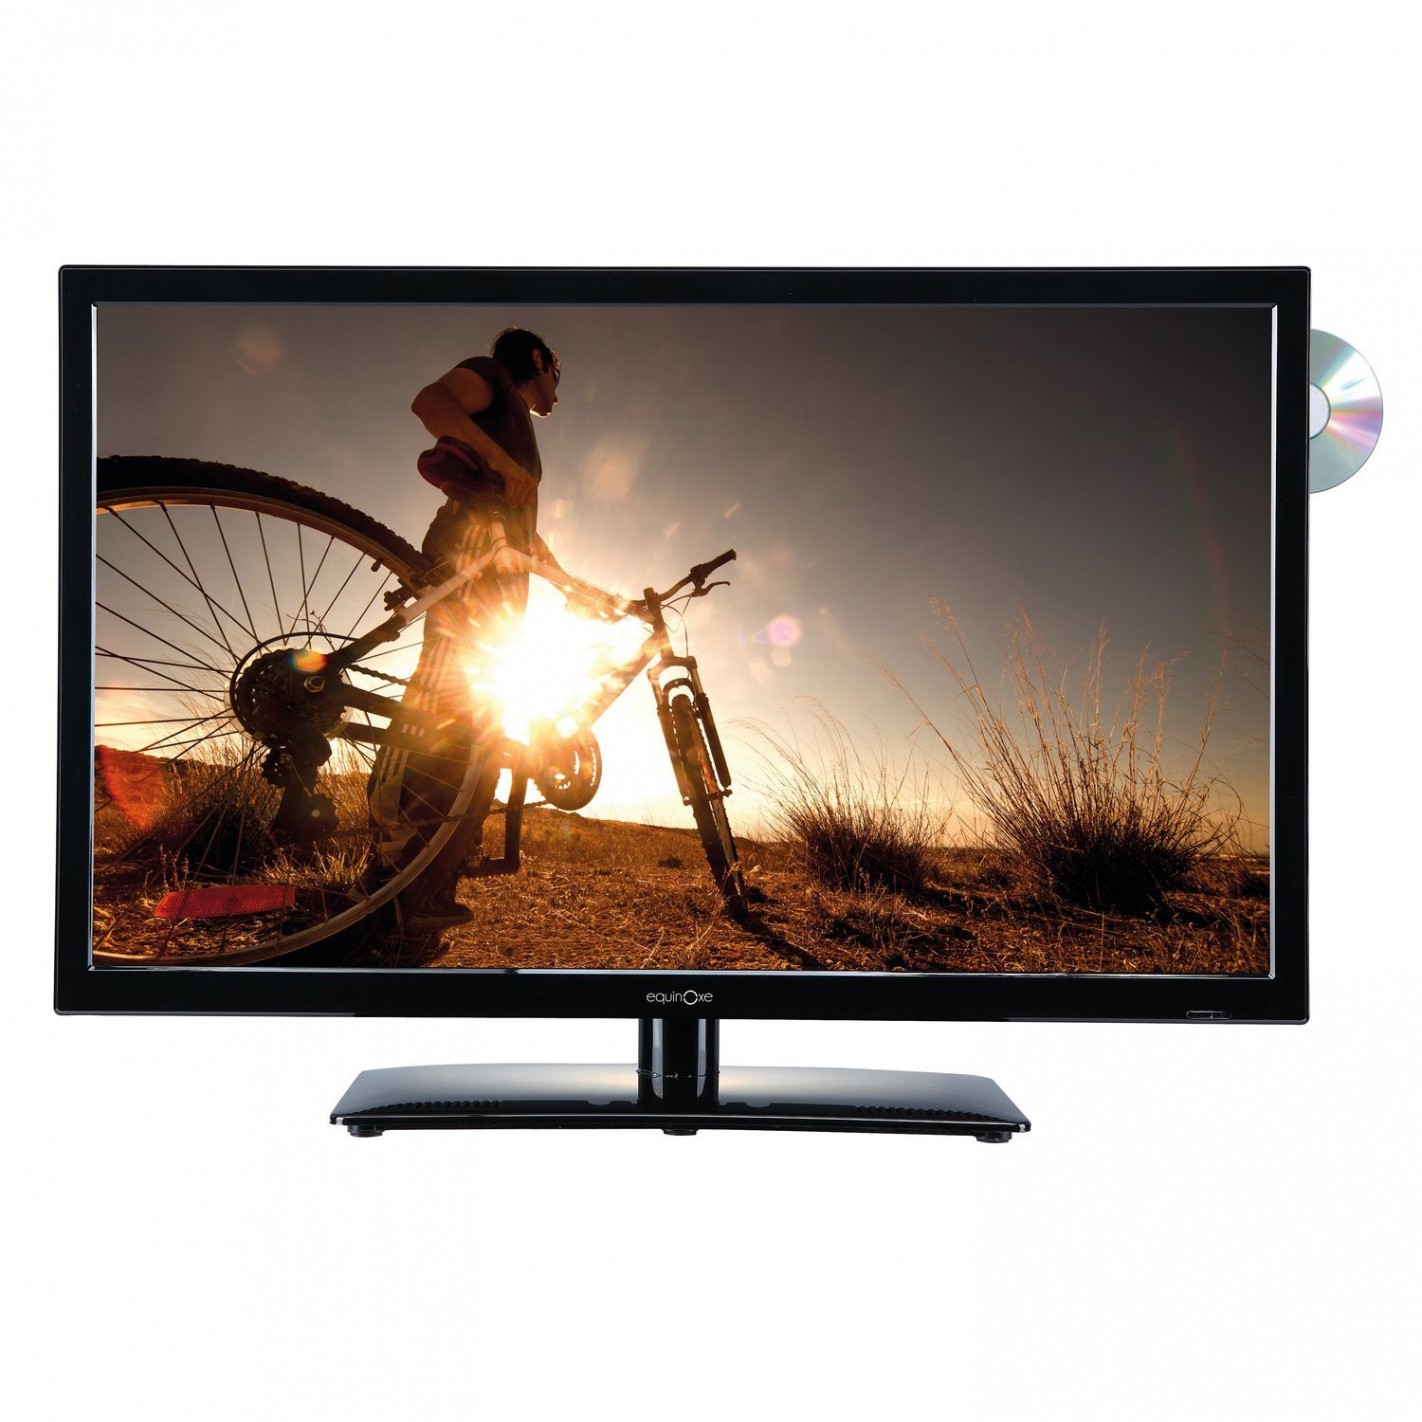 TV de 22 pulgadas, pantalla plana LED FHD de 1080p, pantalla IPS con  sintonizadores digitales duales ATSC/HDMI/VGA/AV/USB, TV RV de 12 voltios